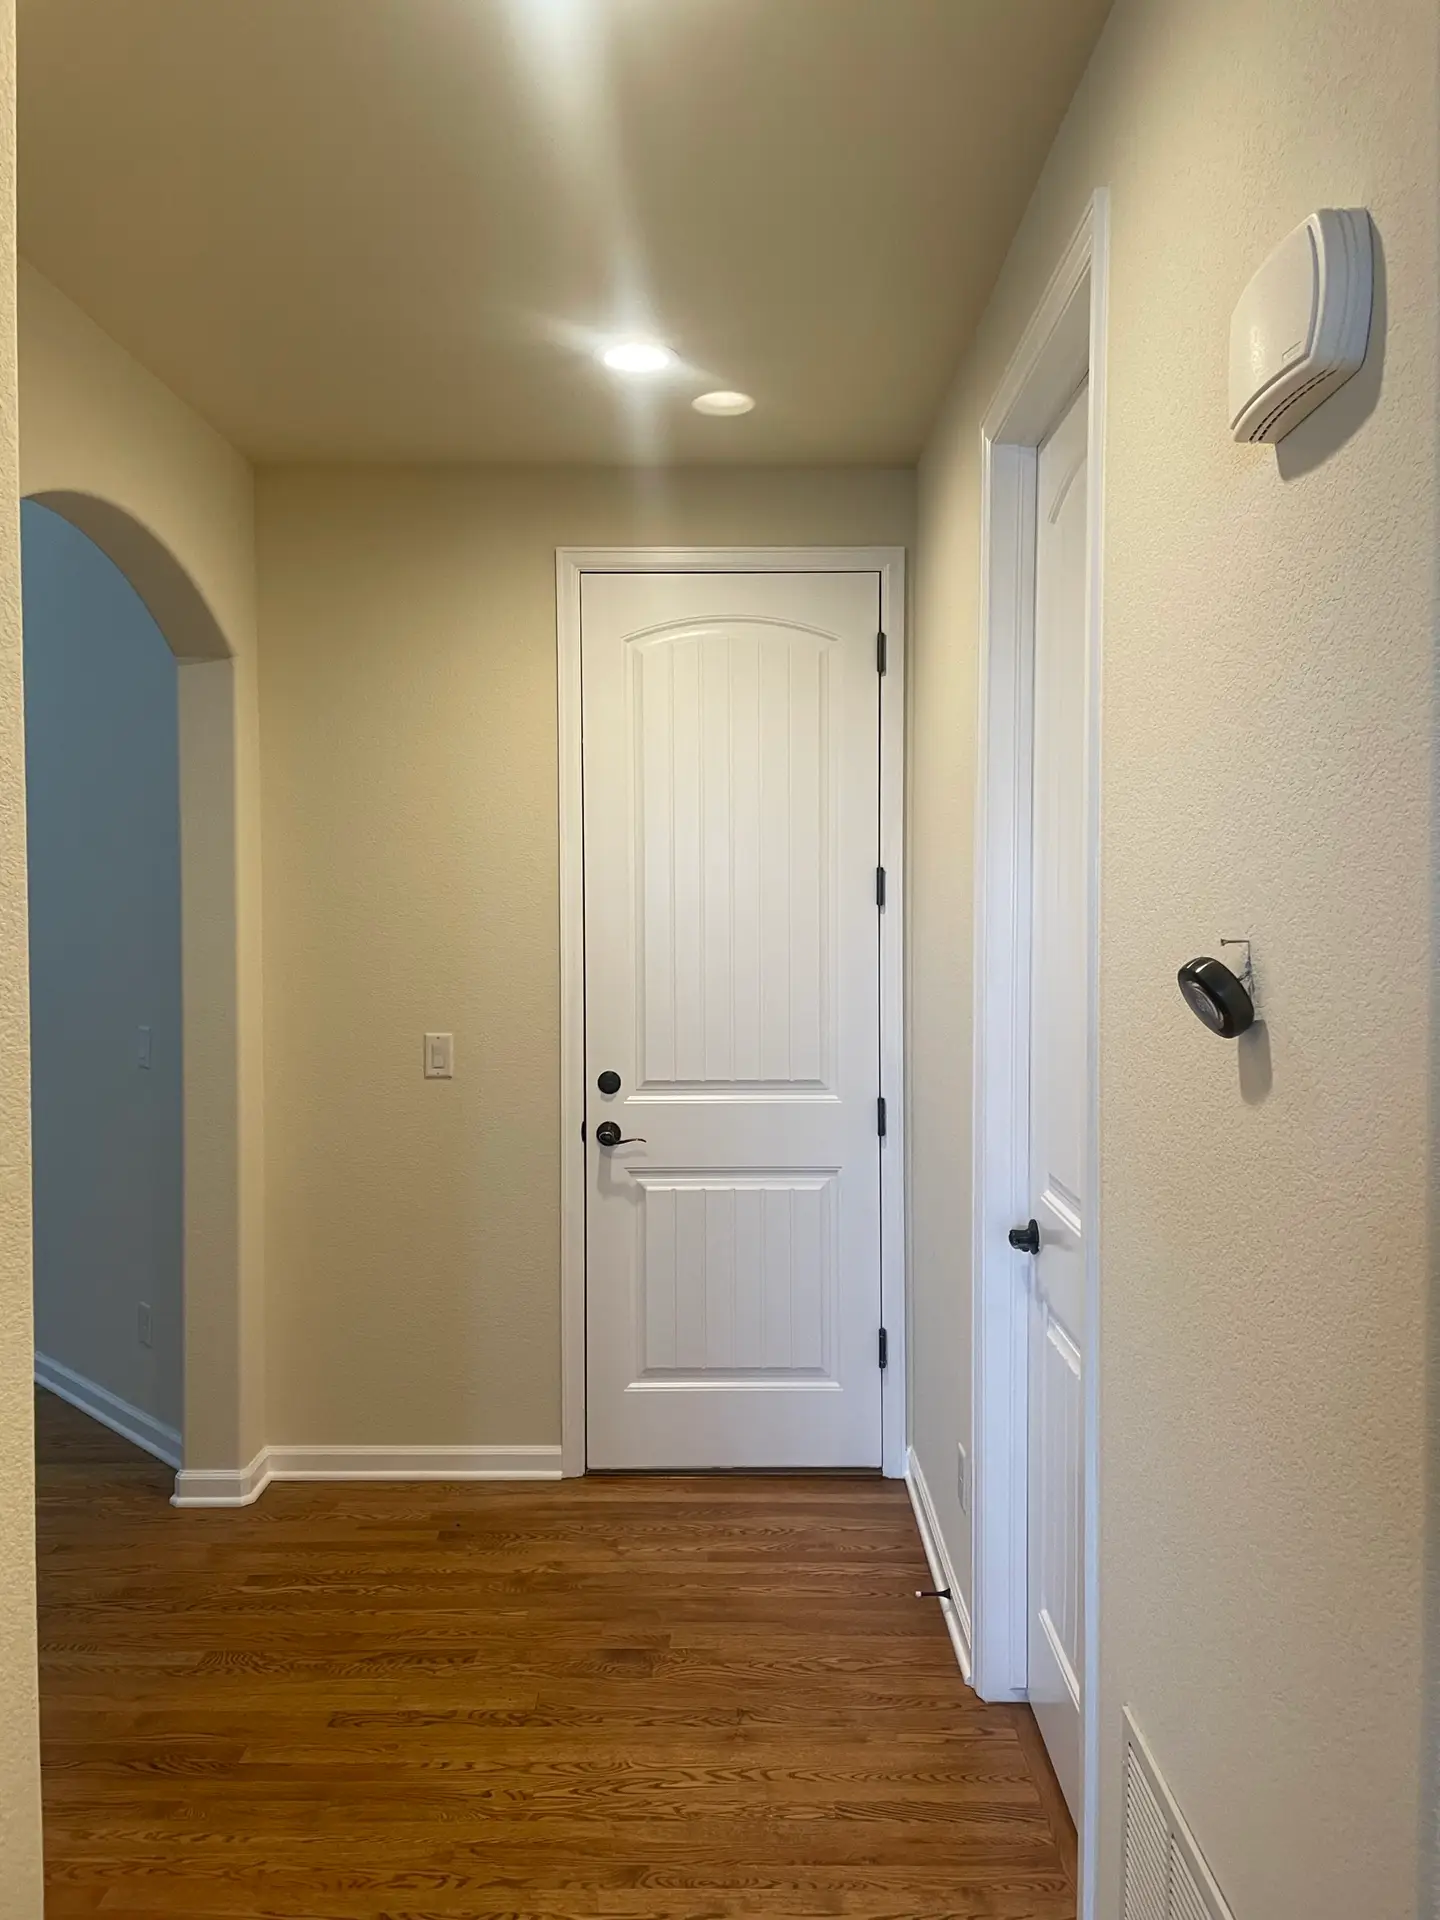 Interior Painting Hallway and Doors